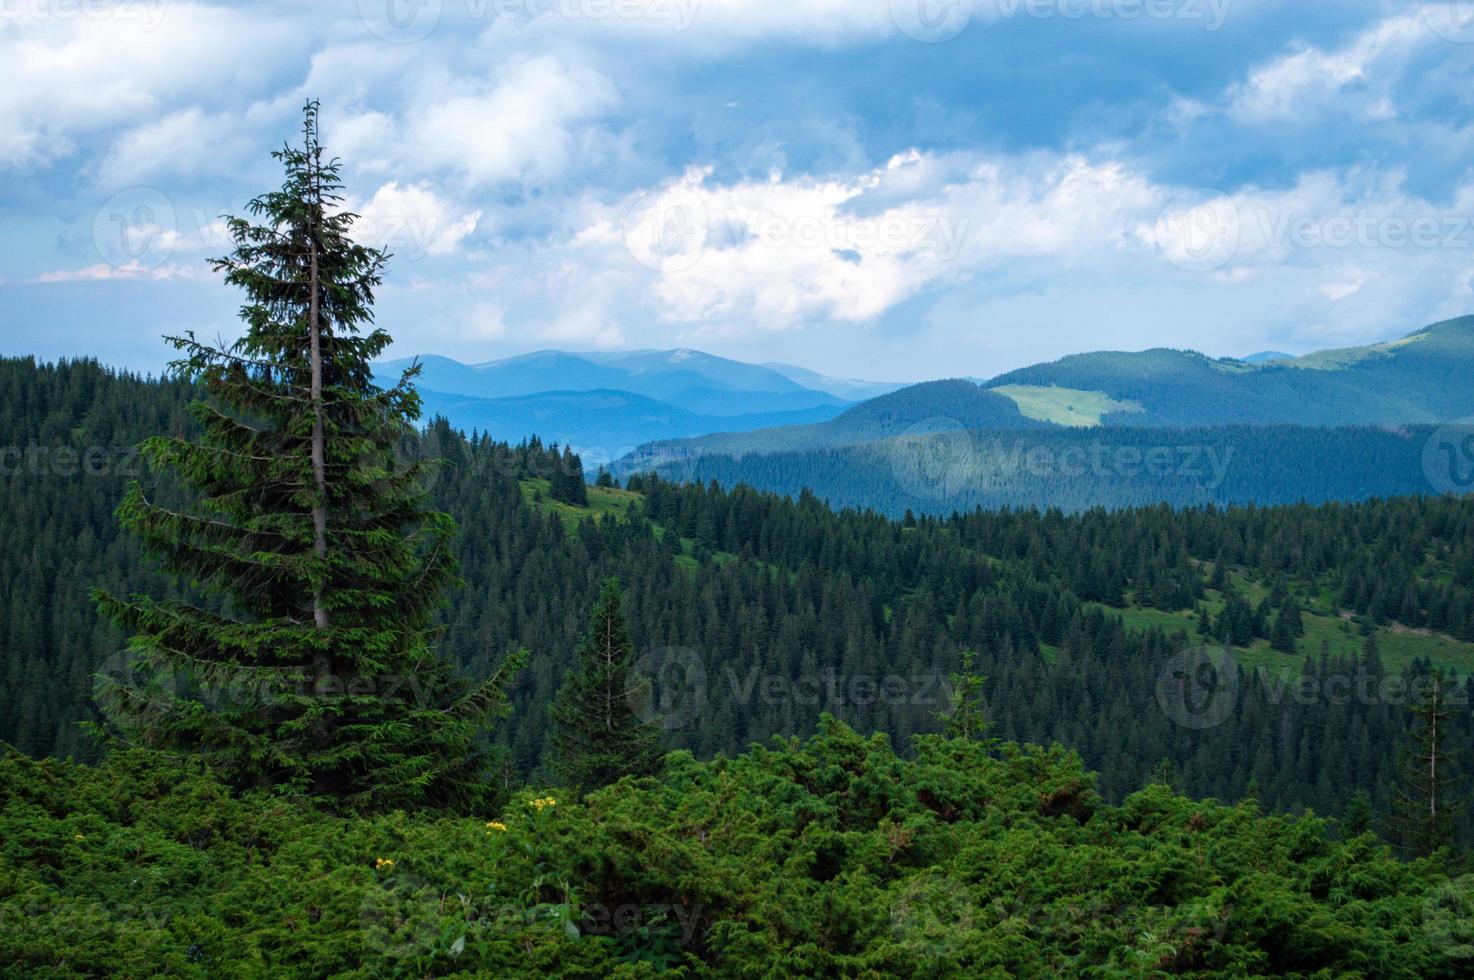 karpater berg panorama av gröna kullar i sommar berg foto